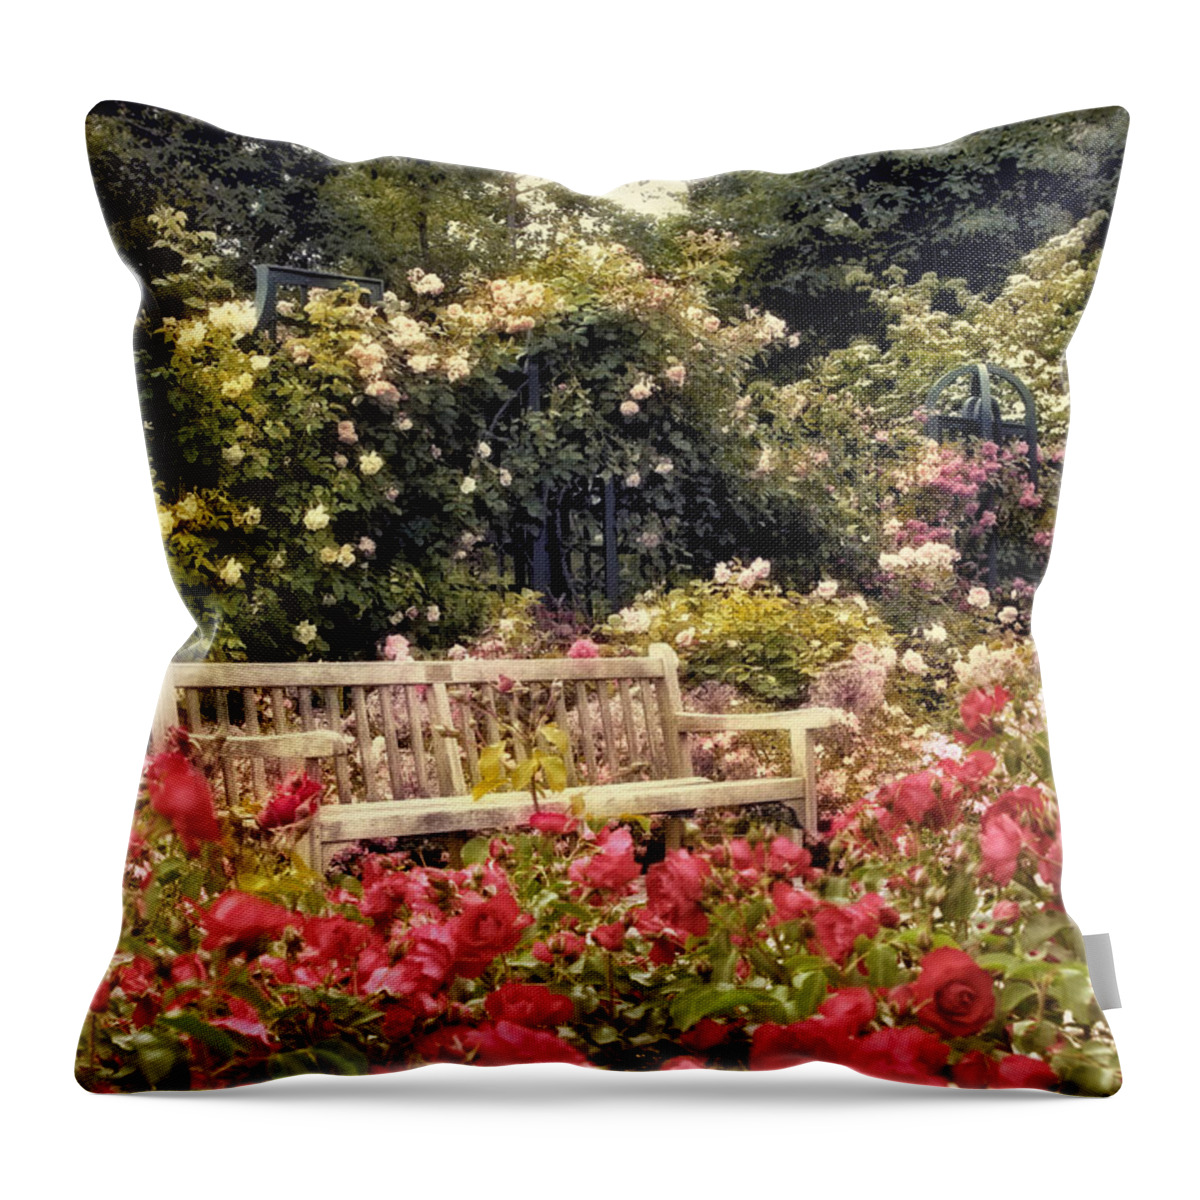 Garden Throw Pillow featuring the photograph Rose Garden Respite by Jessica Jenney